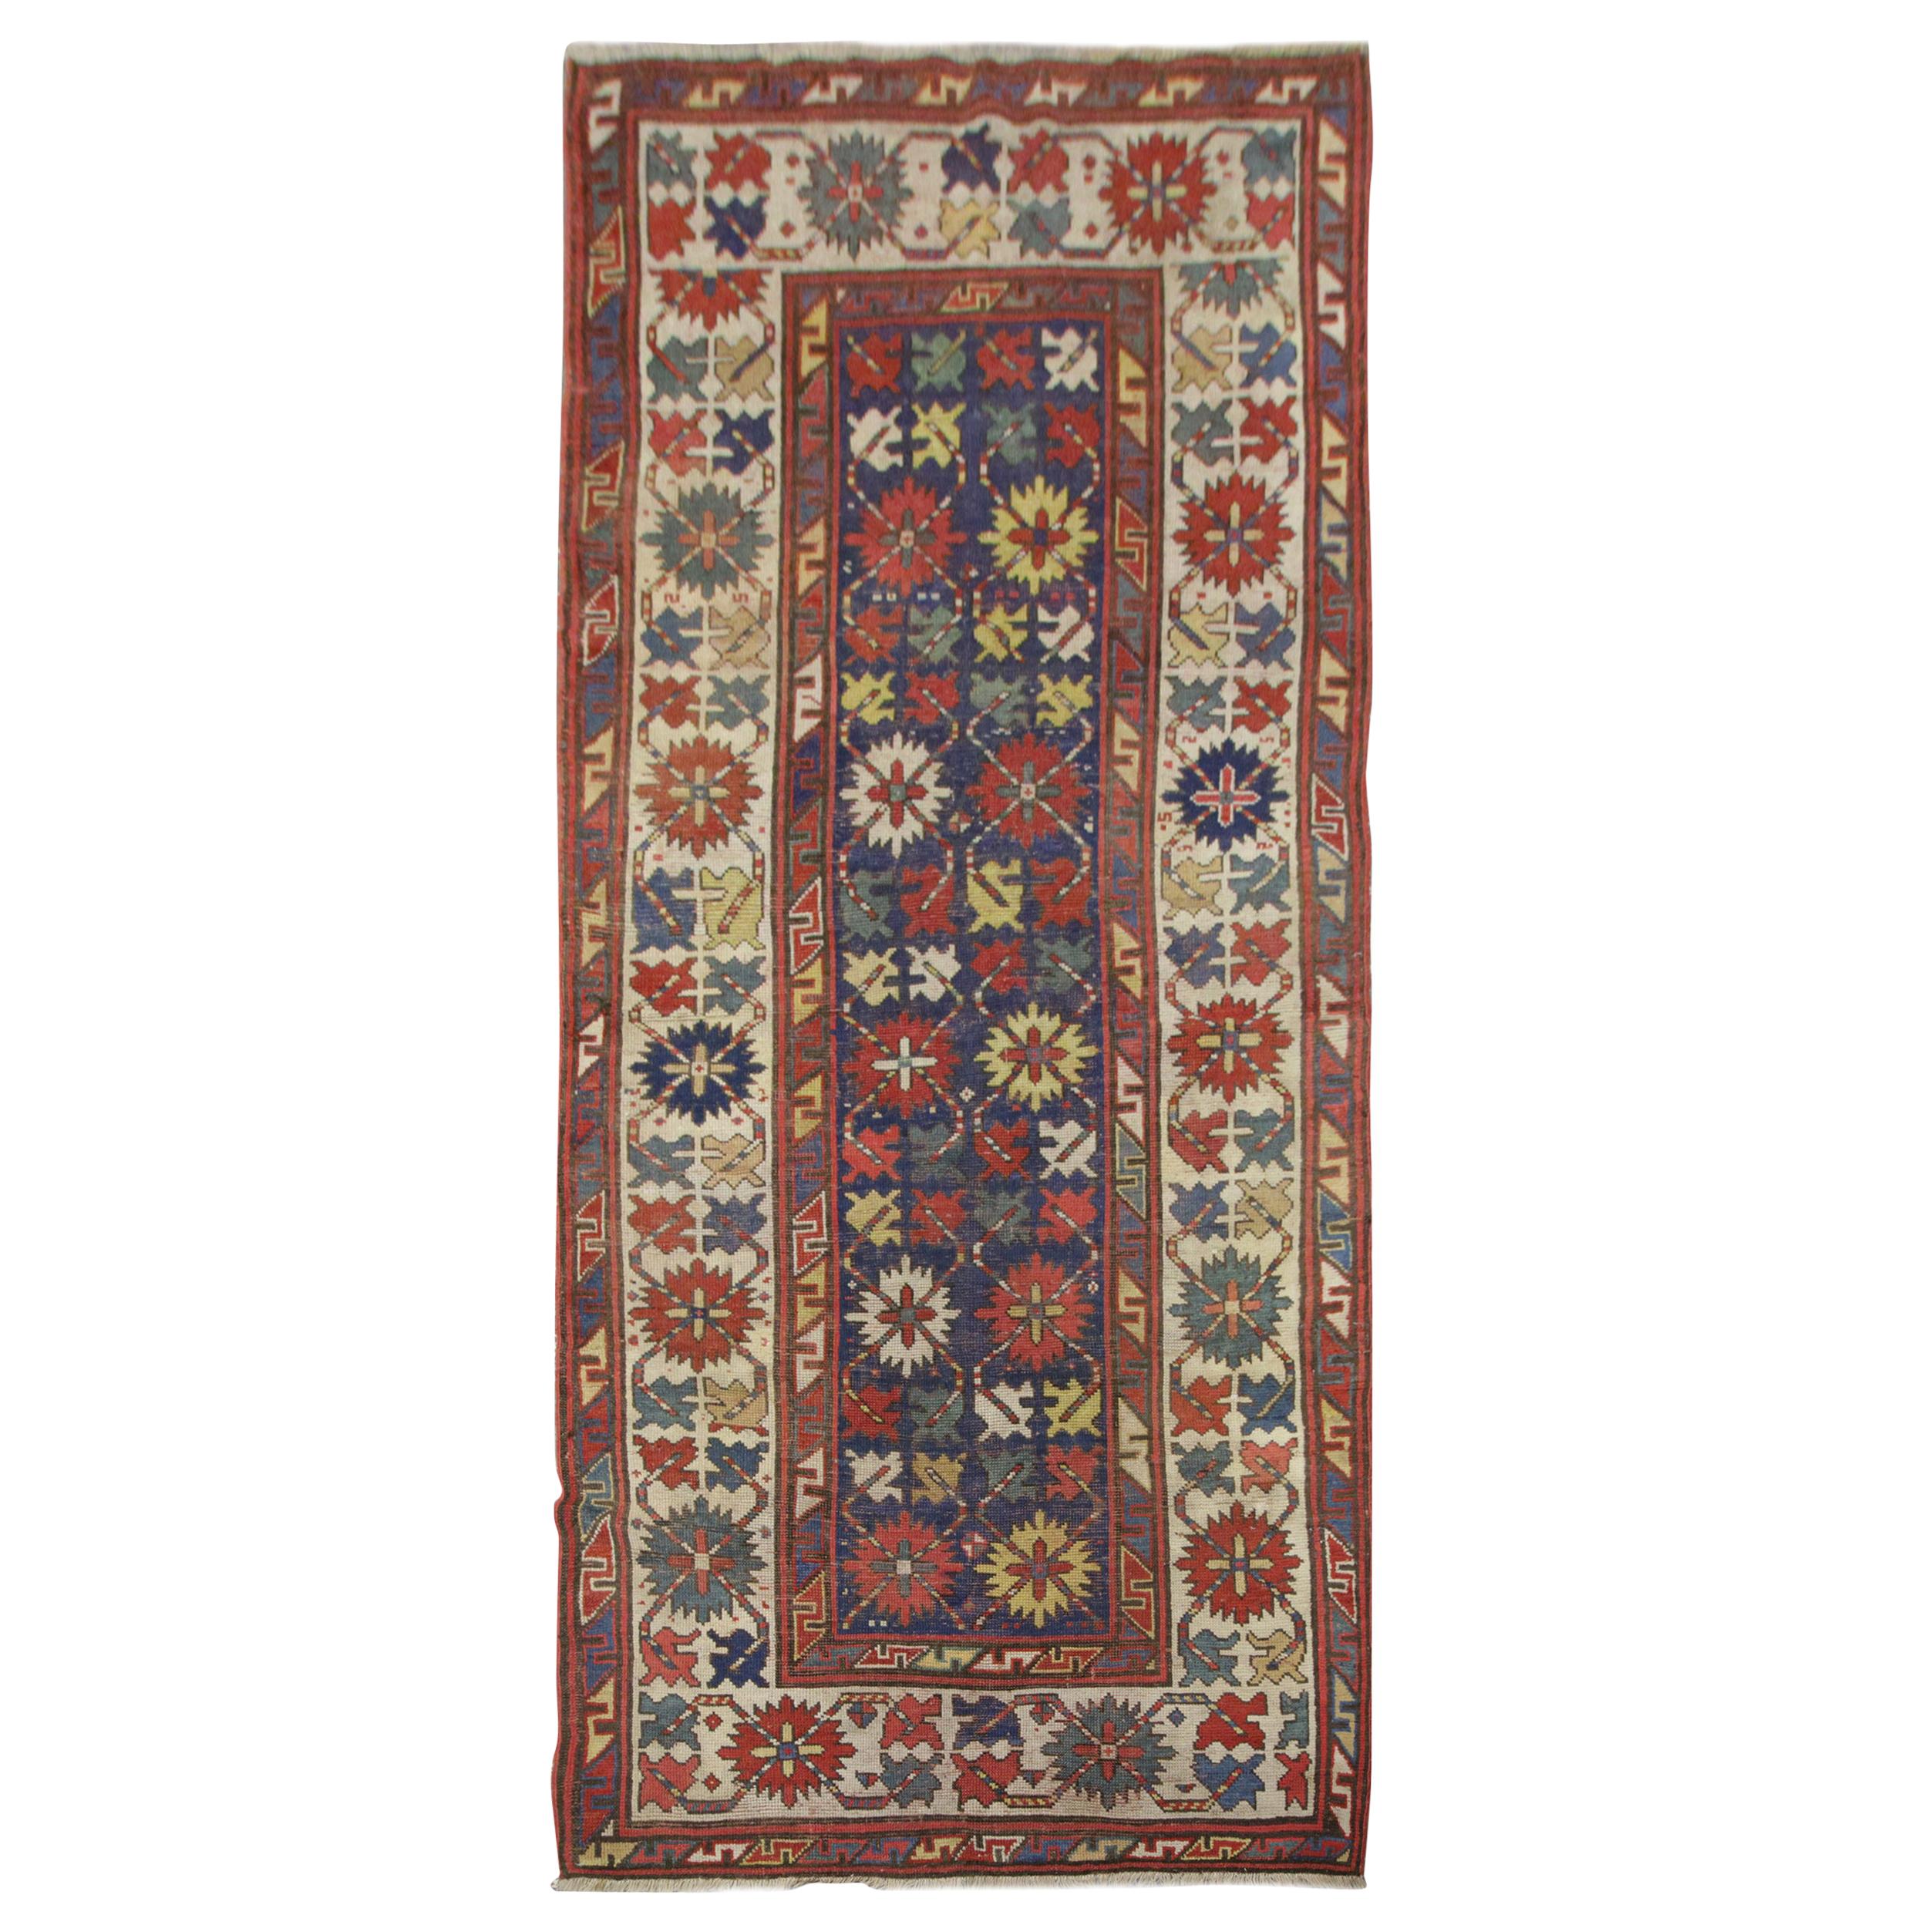 Handmade Carpet Antique Rug Kazak Caucasian Rug, Long Tribal Design Area Rug